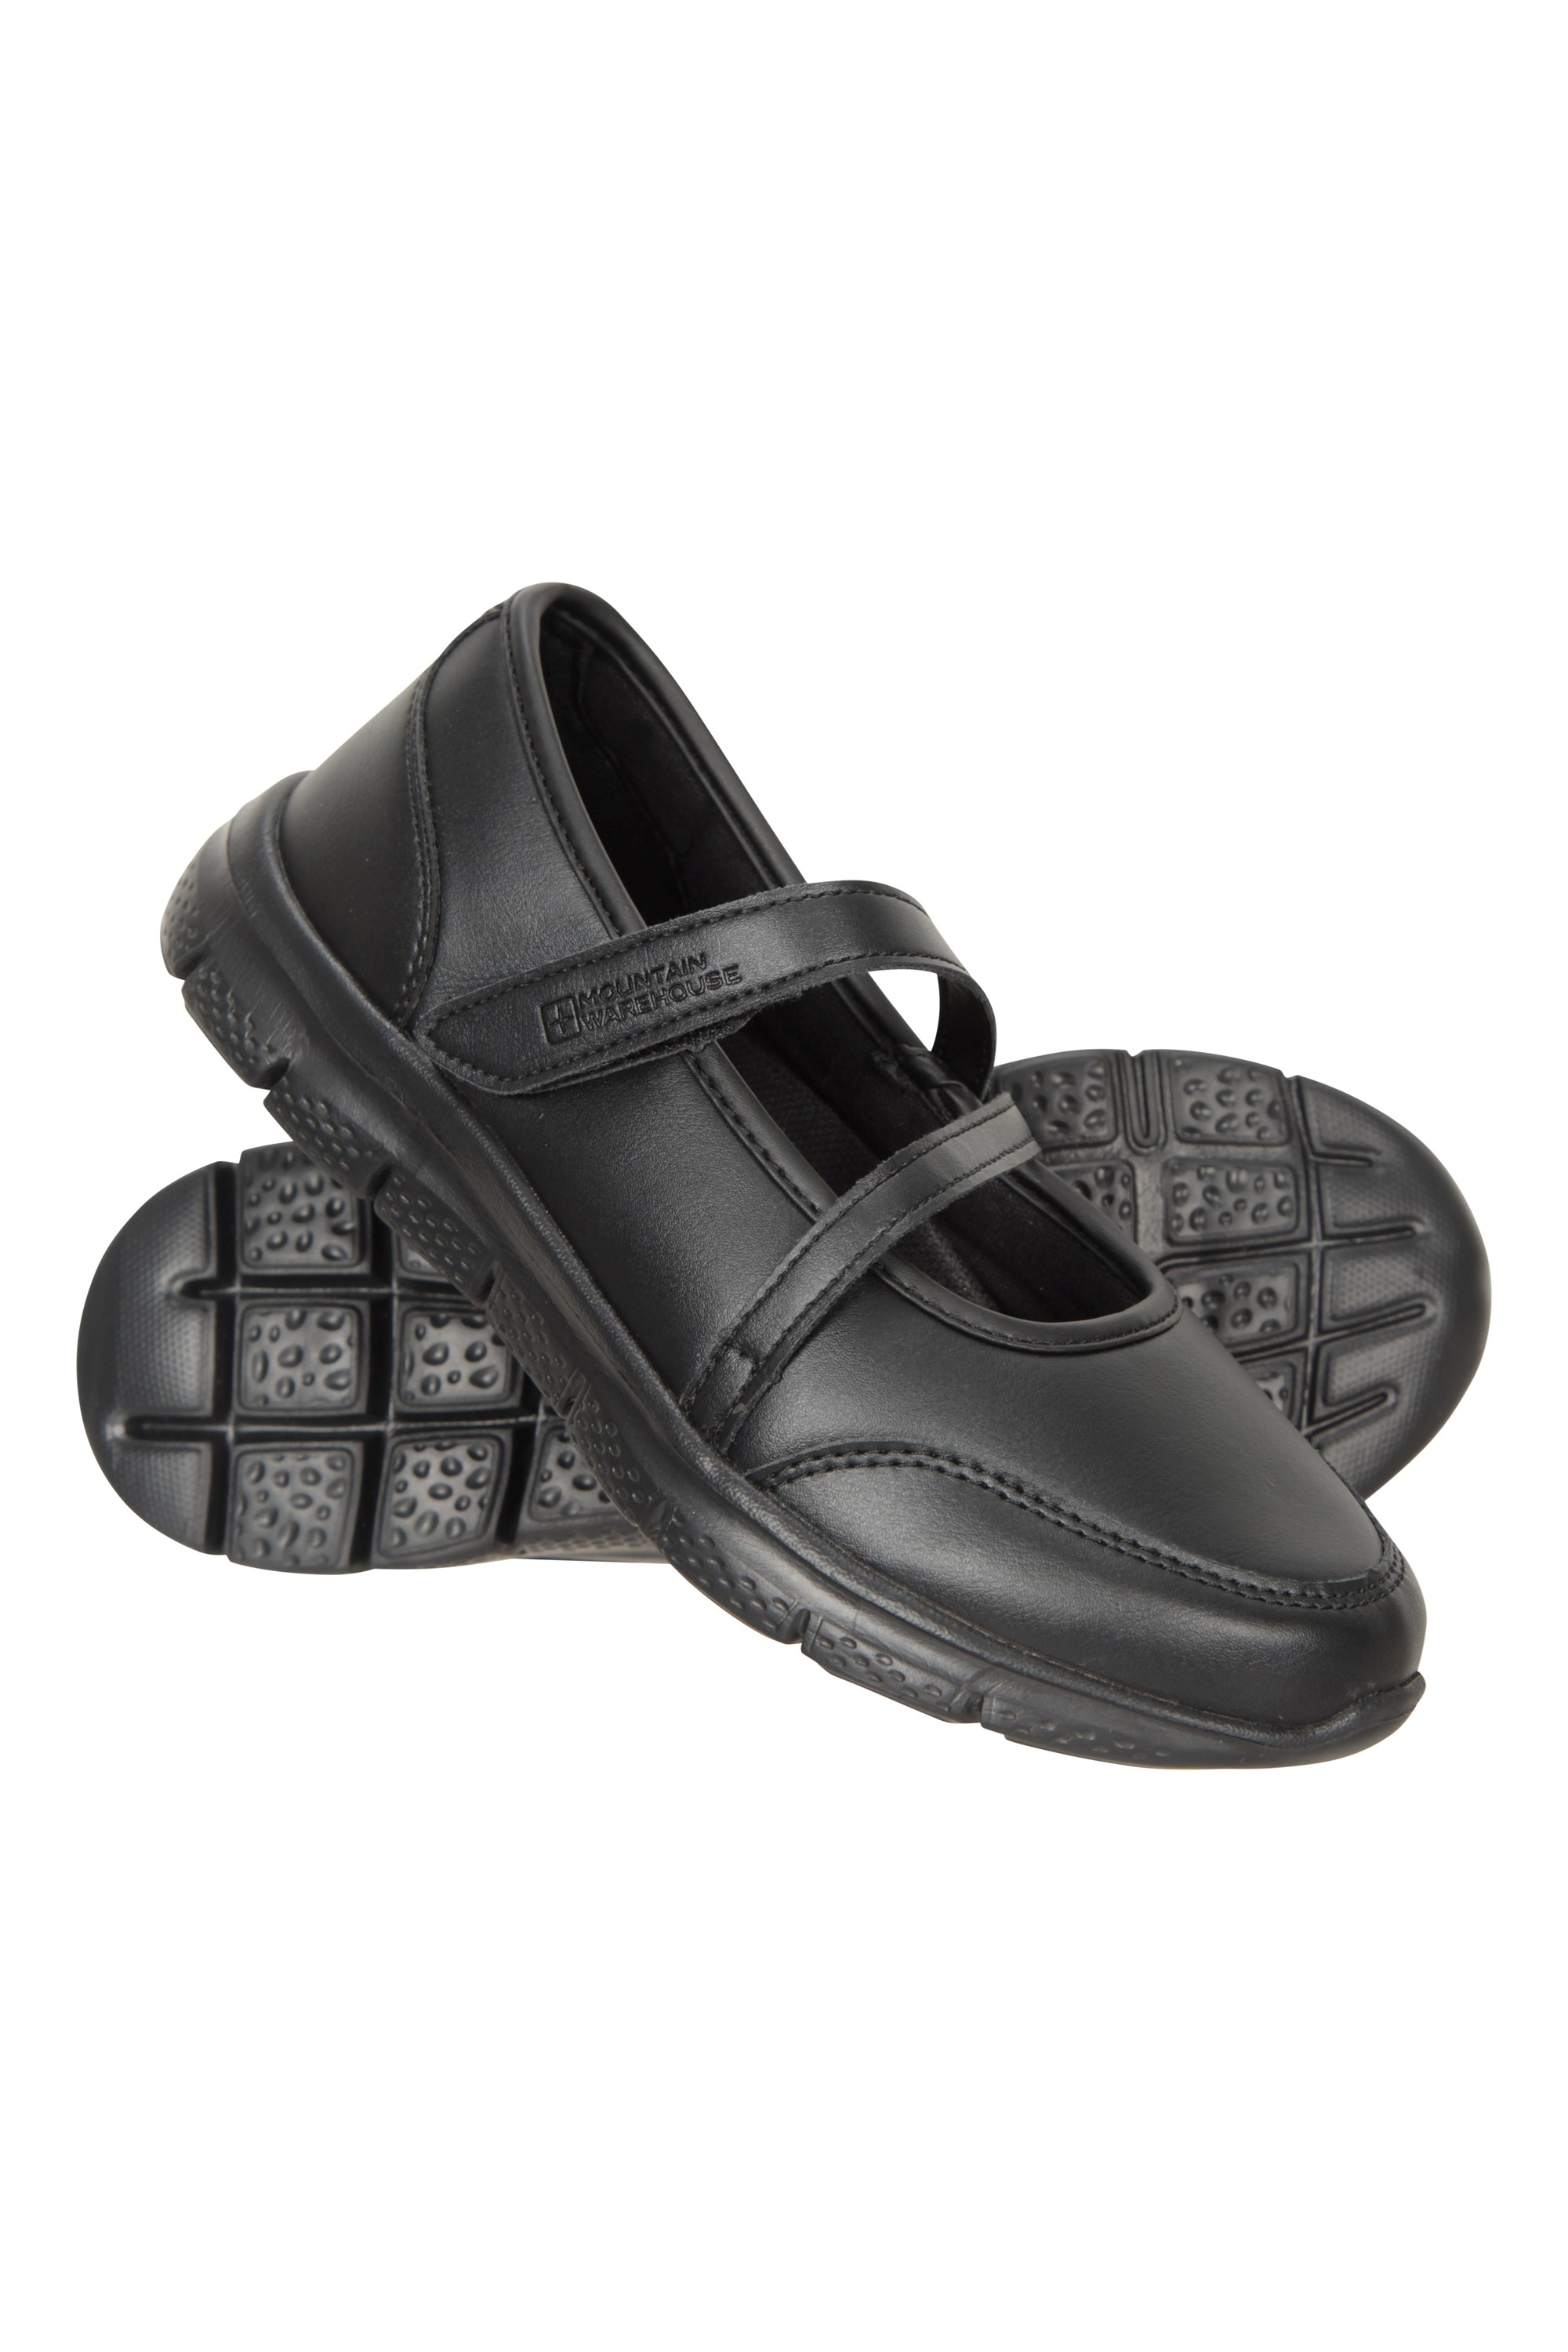 Kite Kids Adaptive School Shoes - Black